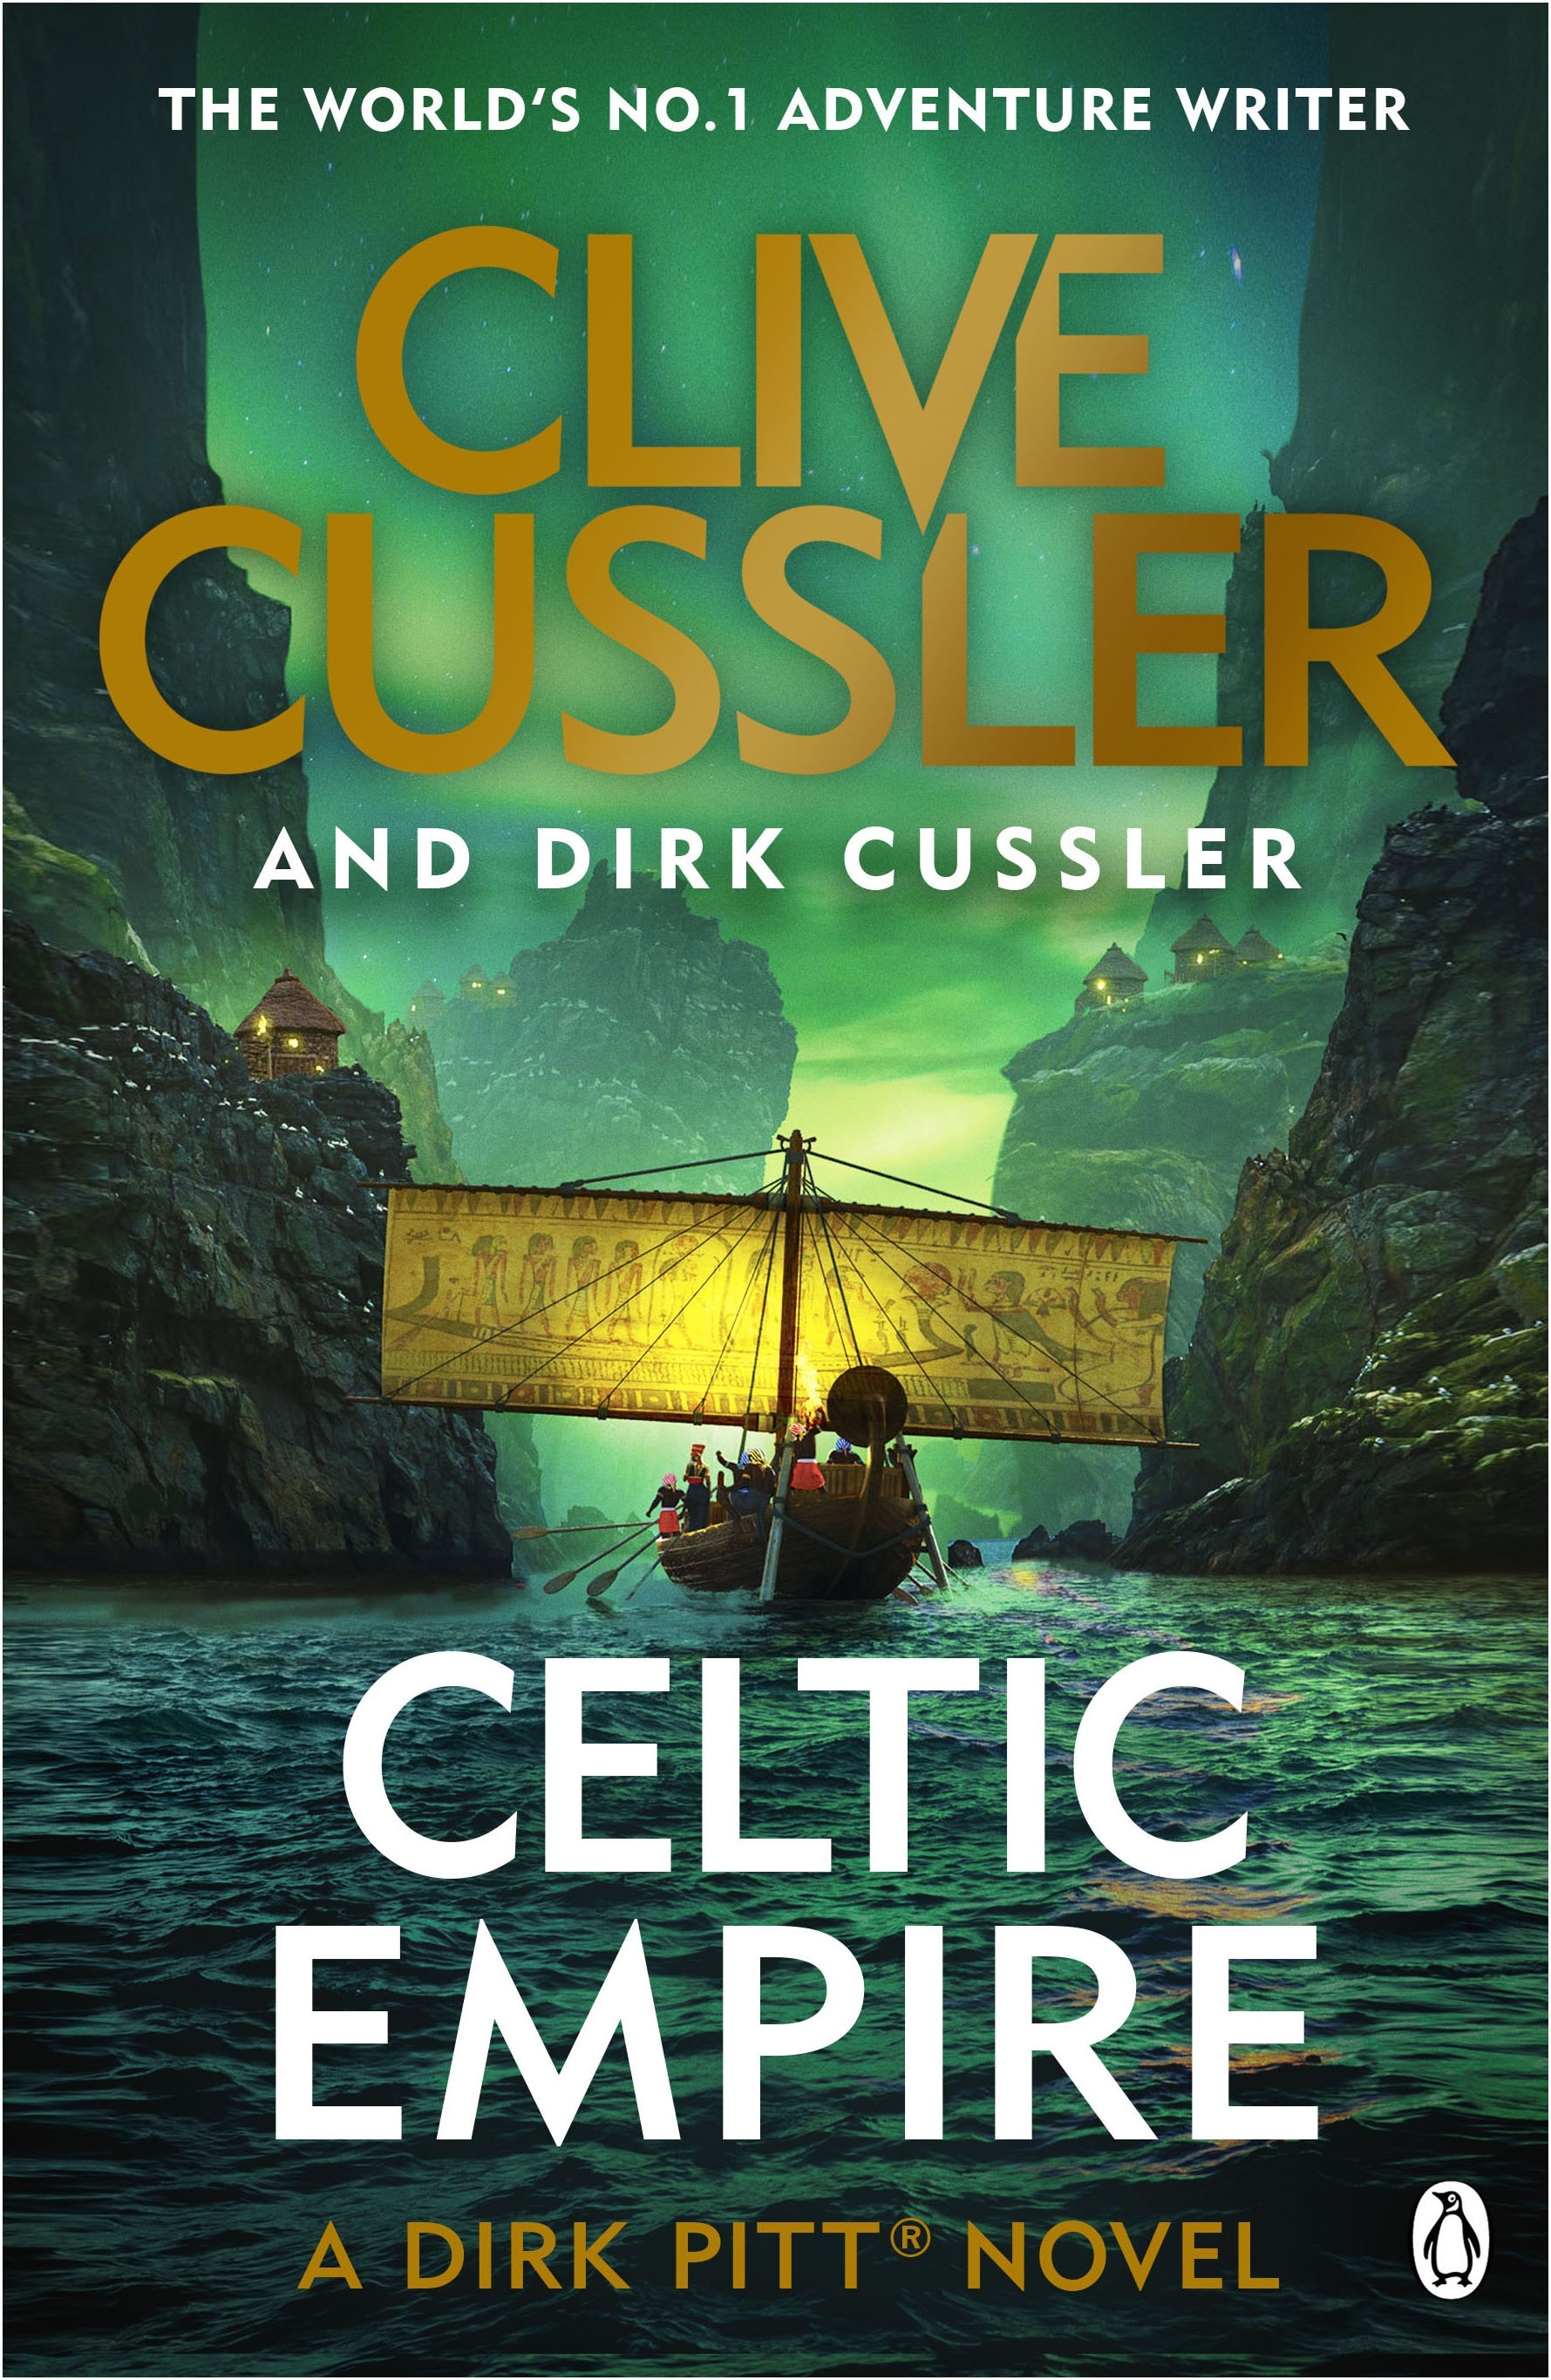 Book “Celtic Empire” by Clive Cussler, Dirk Cussler — March 19, 2020